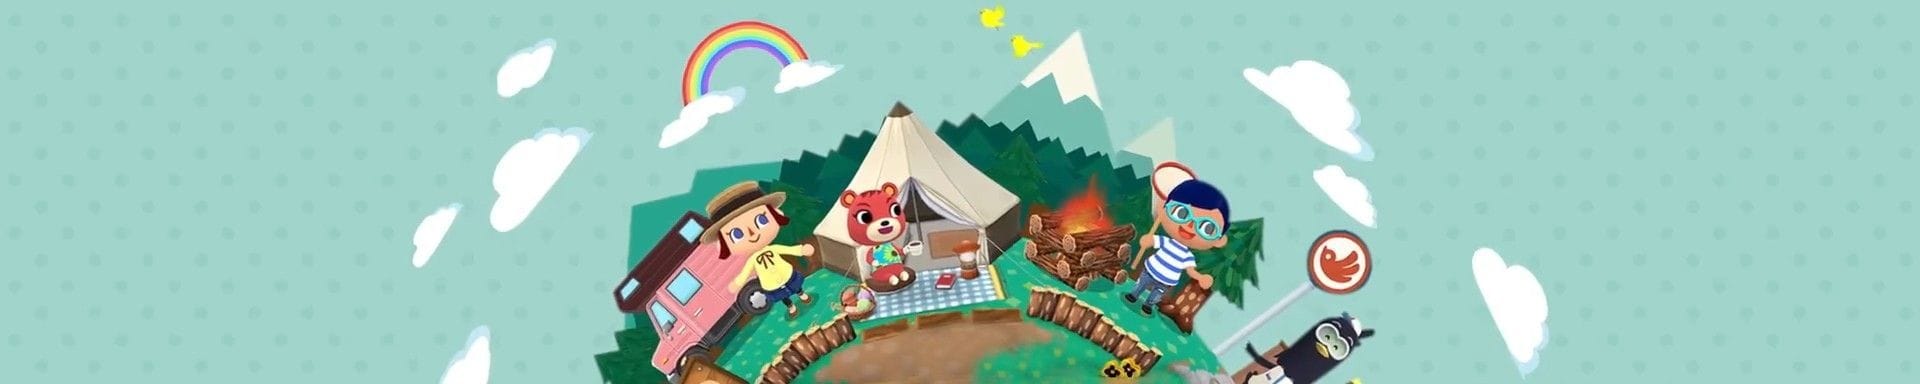 Animal Crossing: Pocket Camp slice